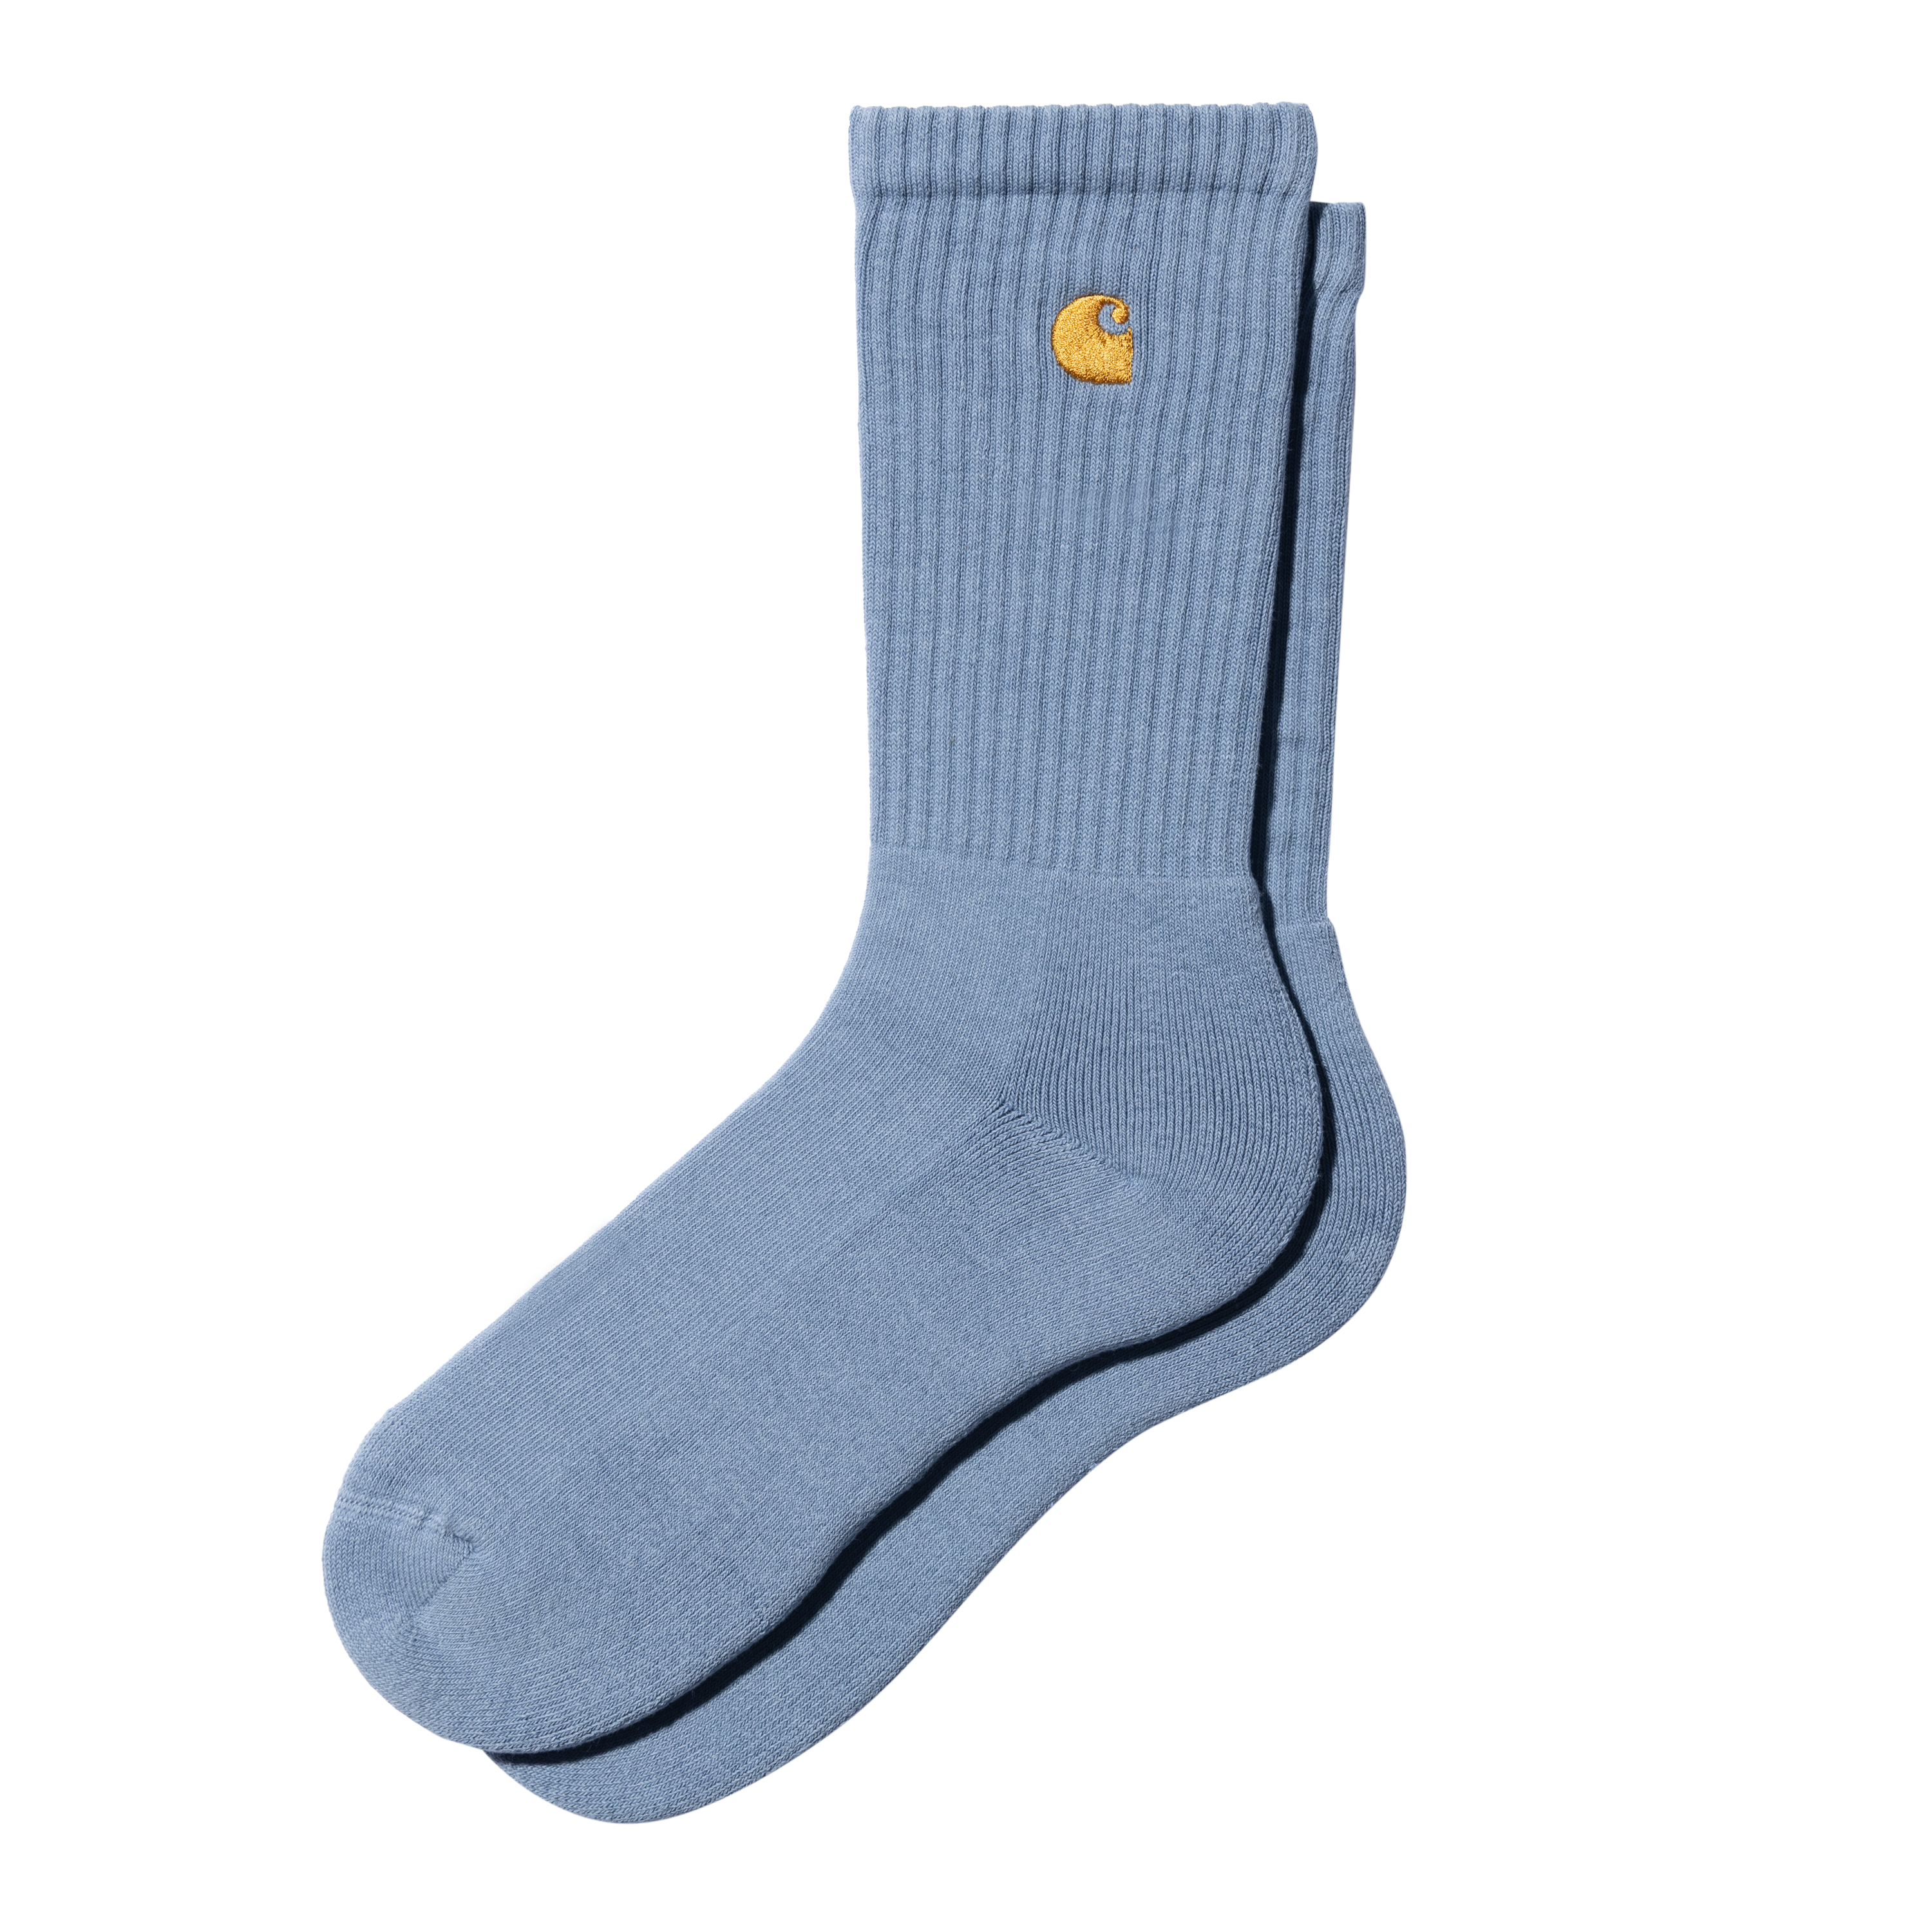 Carhartt WIP Chase Socks in Blu